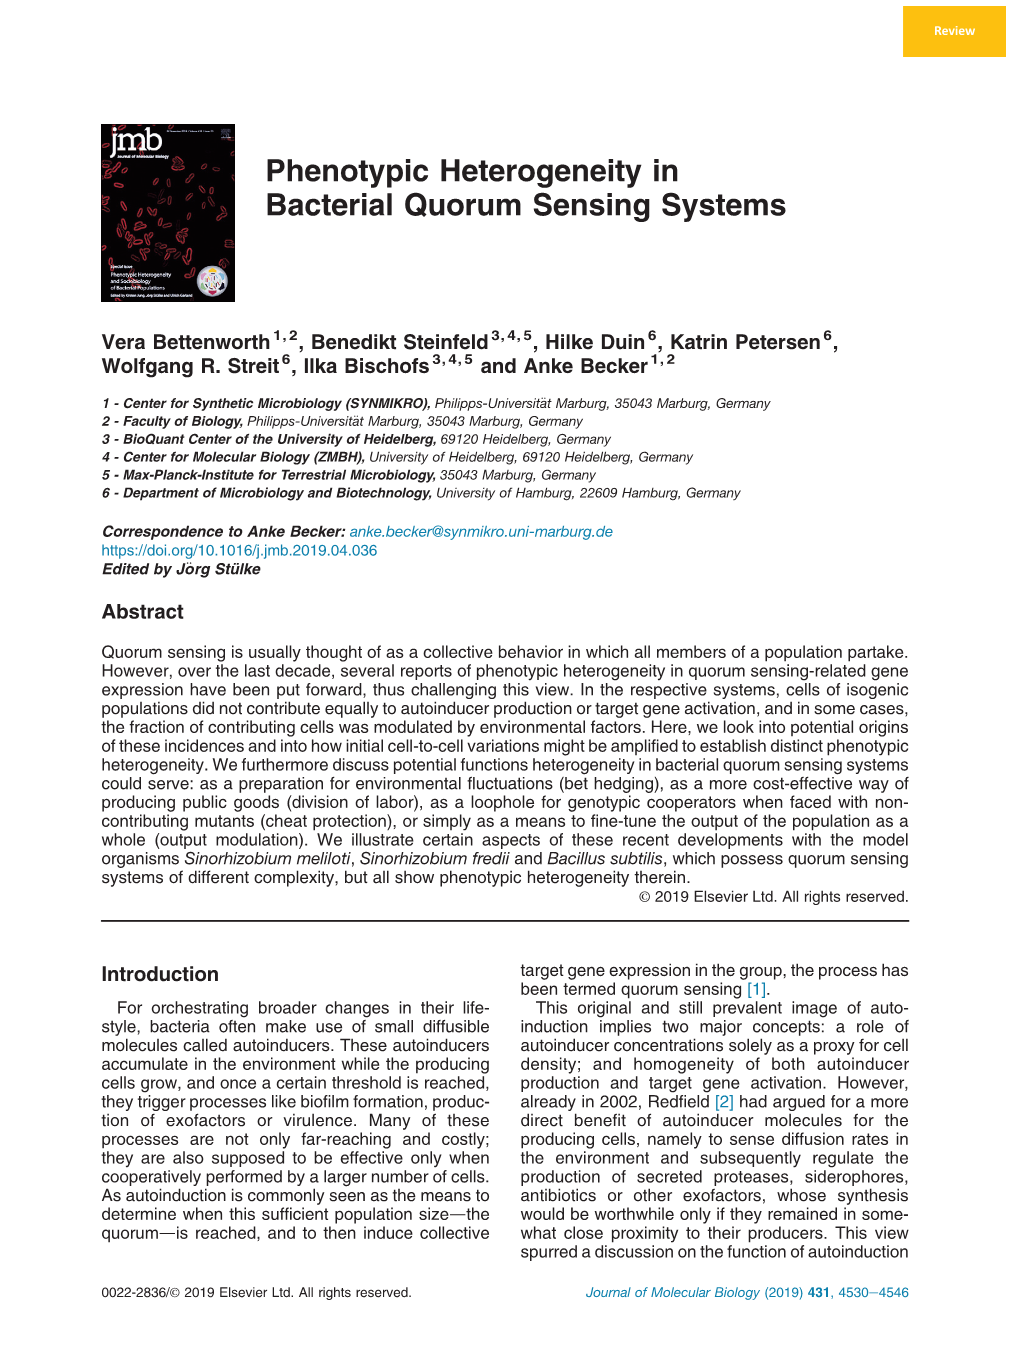 Phenotypic Heterogeneity in Bacterial Quorum Sensing Systems